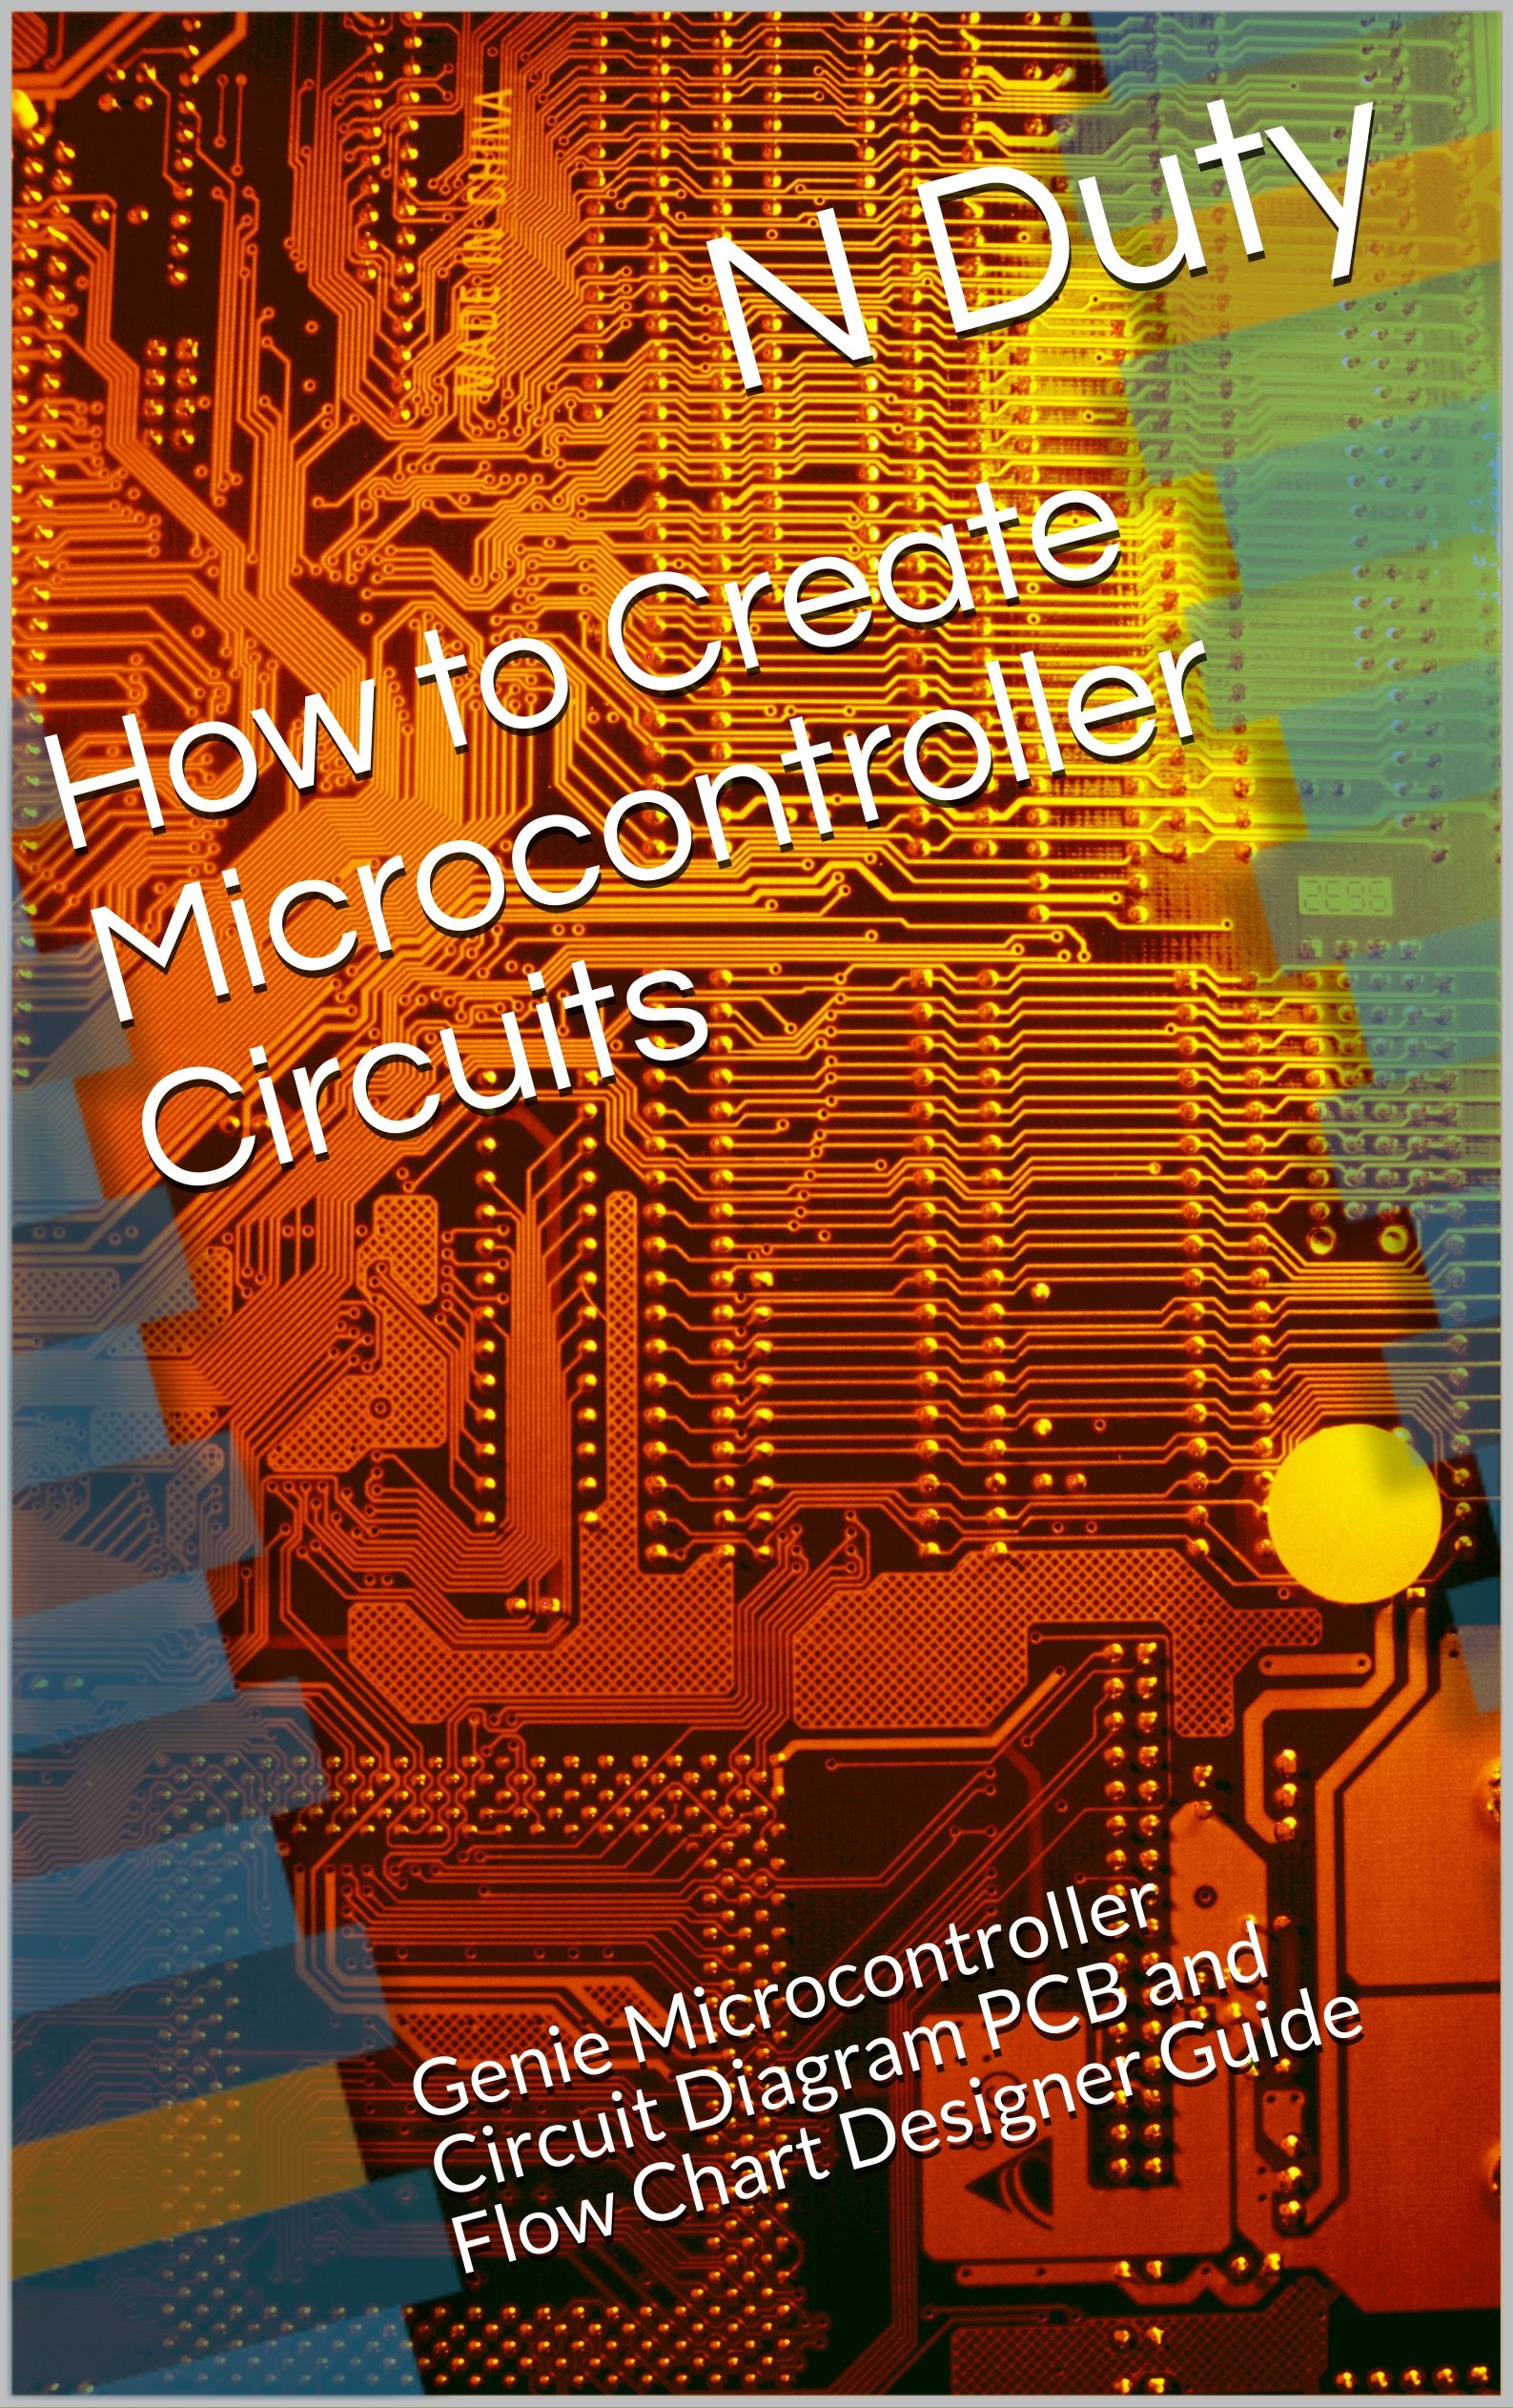 Microcontroller circuit diagram